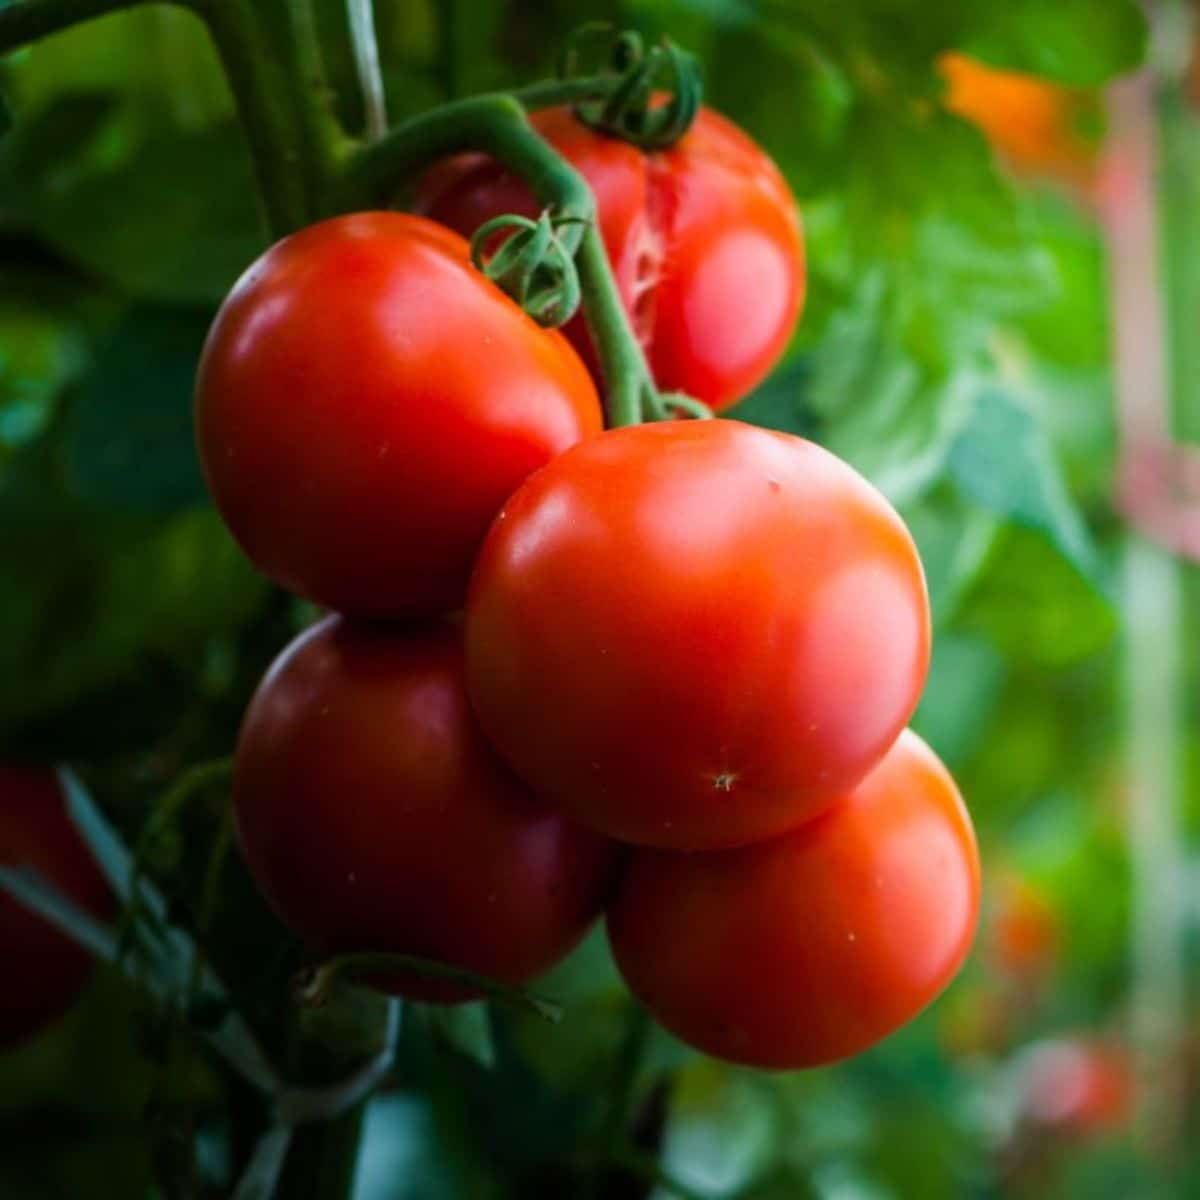 Determinate tomatoes ripening uniformly on the vine.